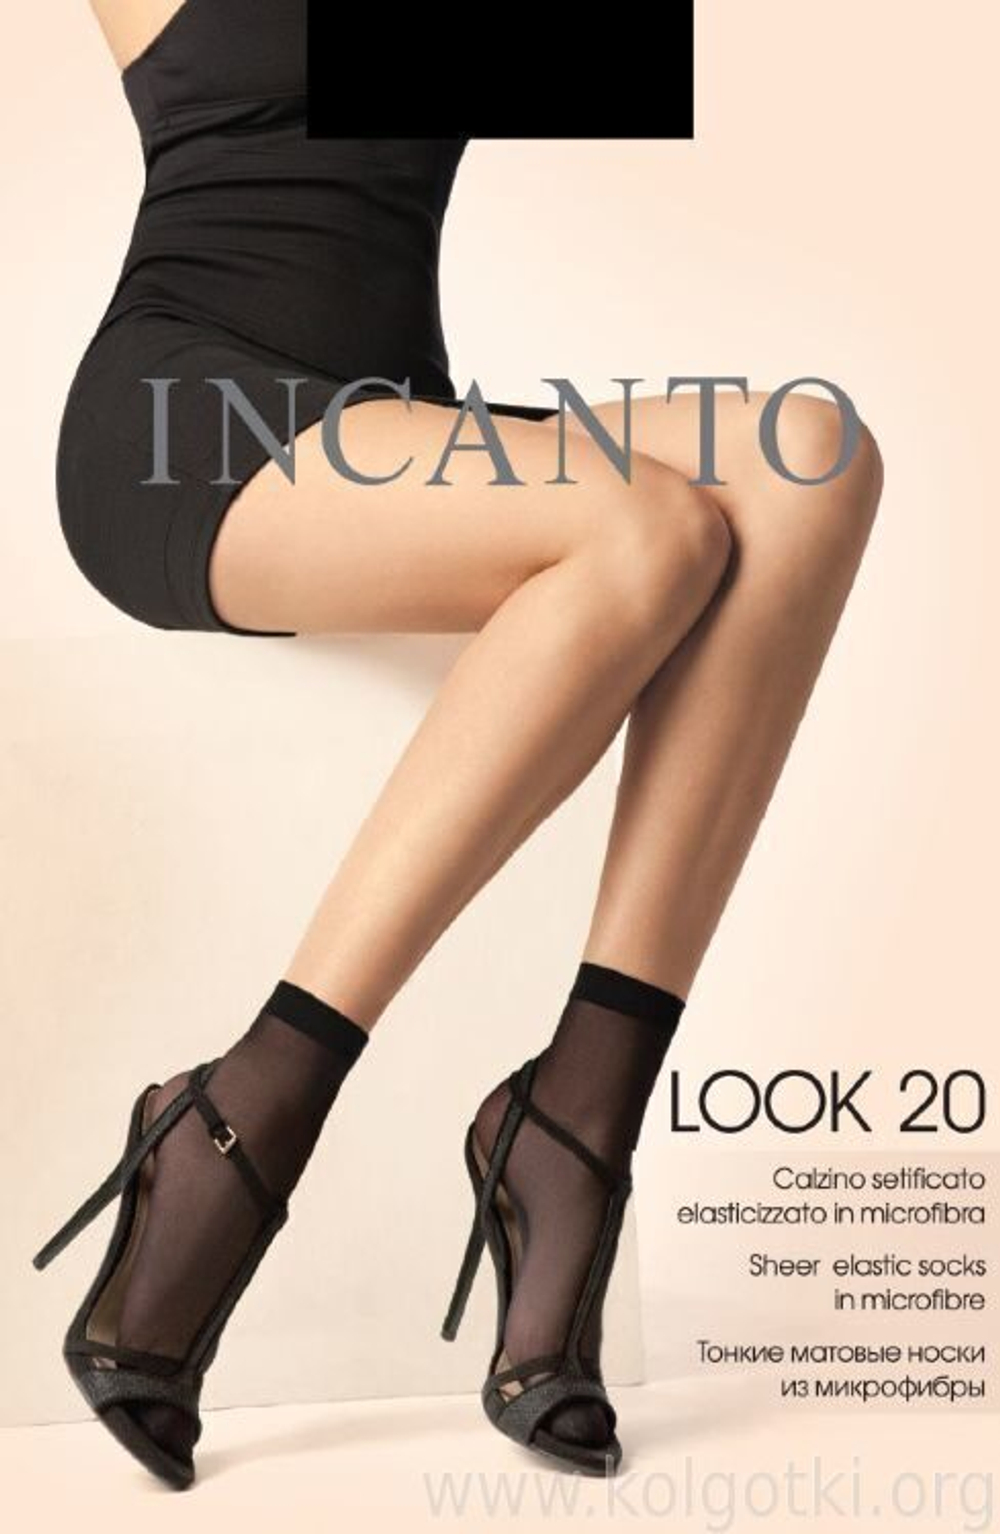 Incanto Look 20 (носки, 2 пары)